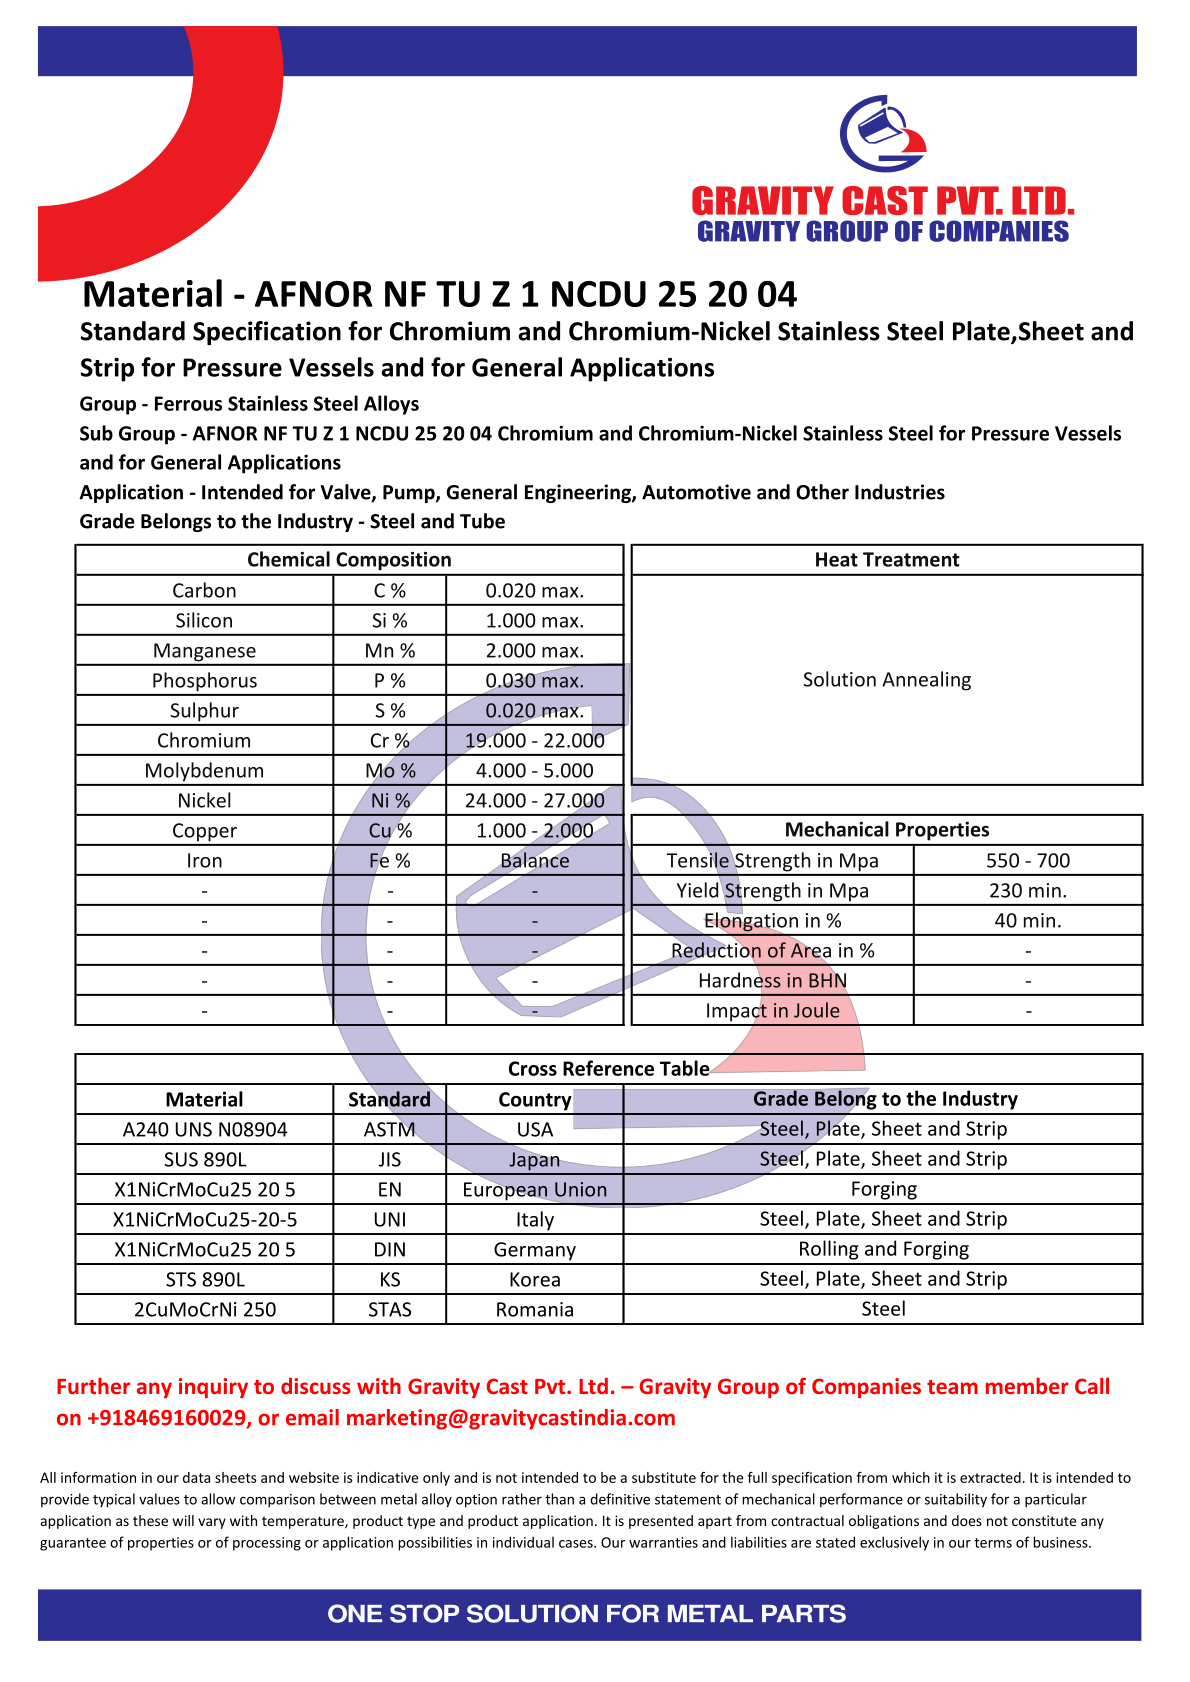 AFNOR NF TU Z 1 NCDU 25 20 04.pdf